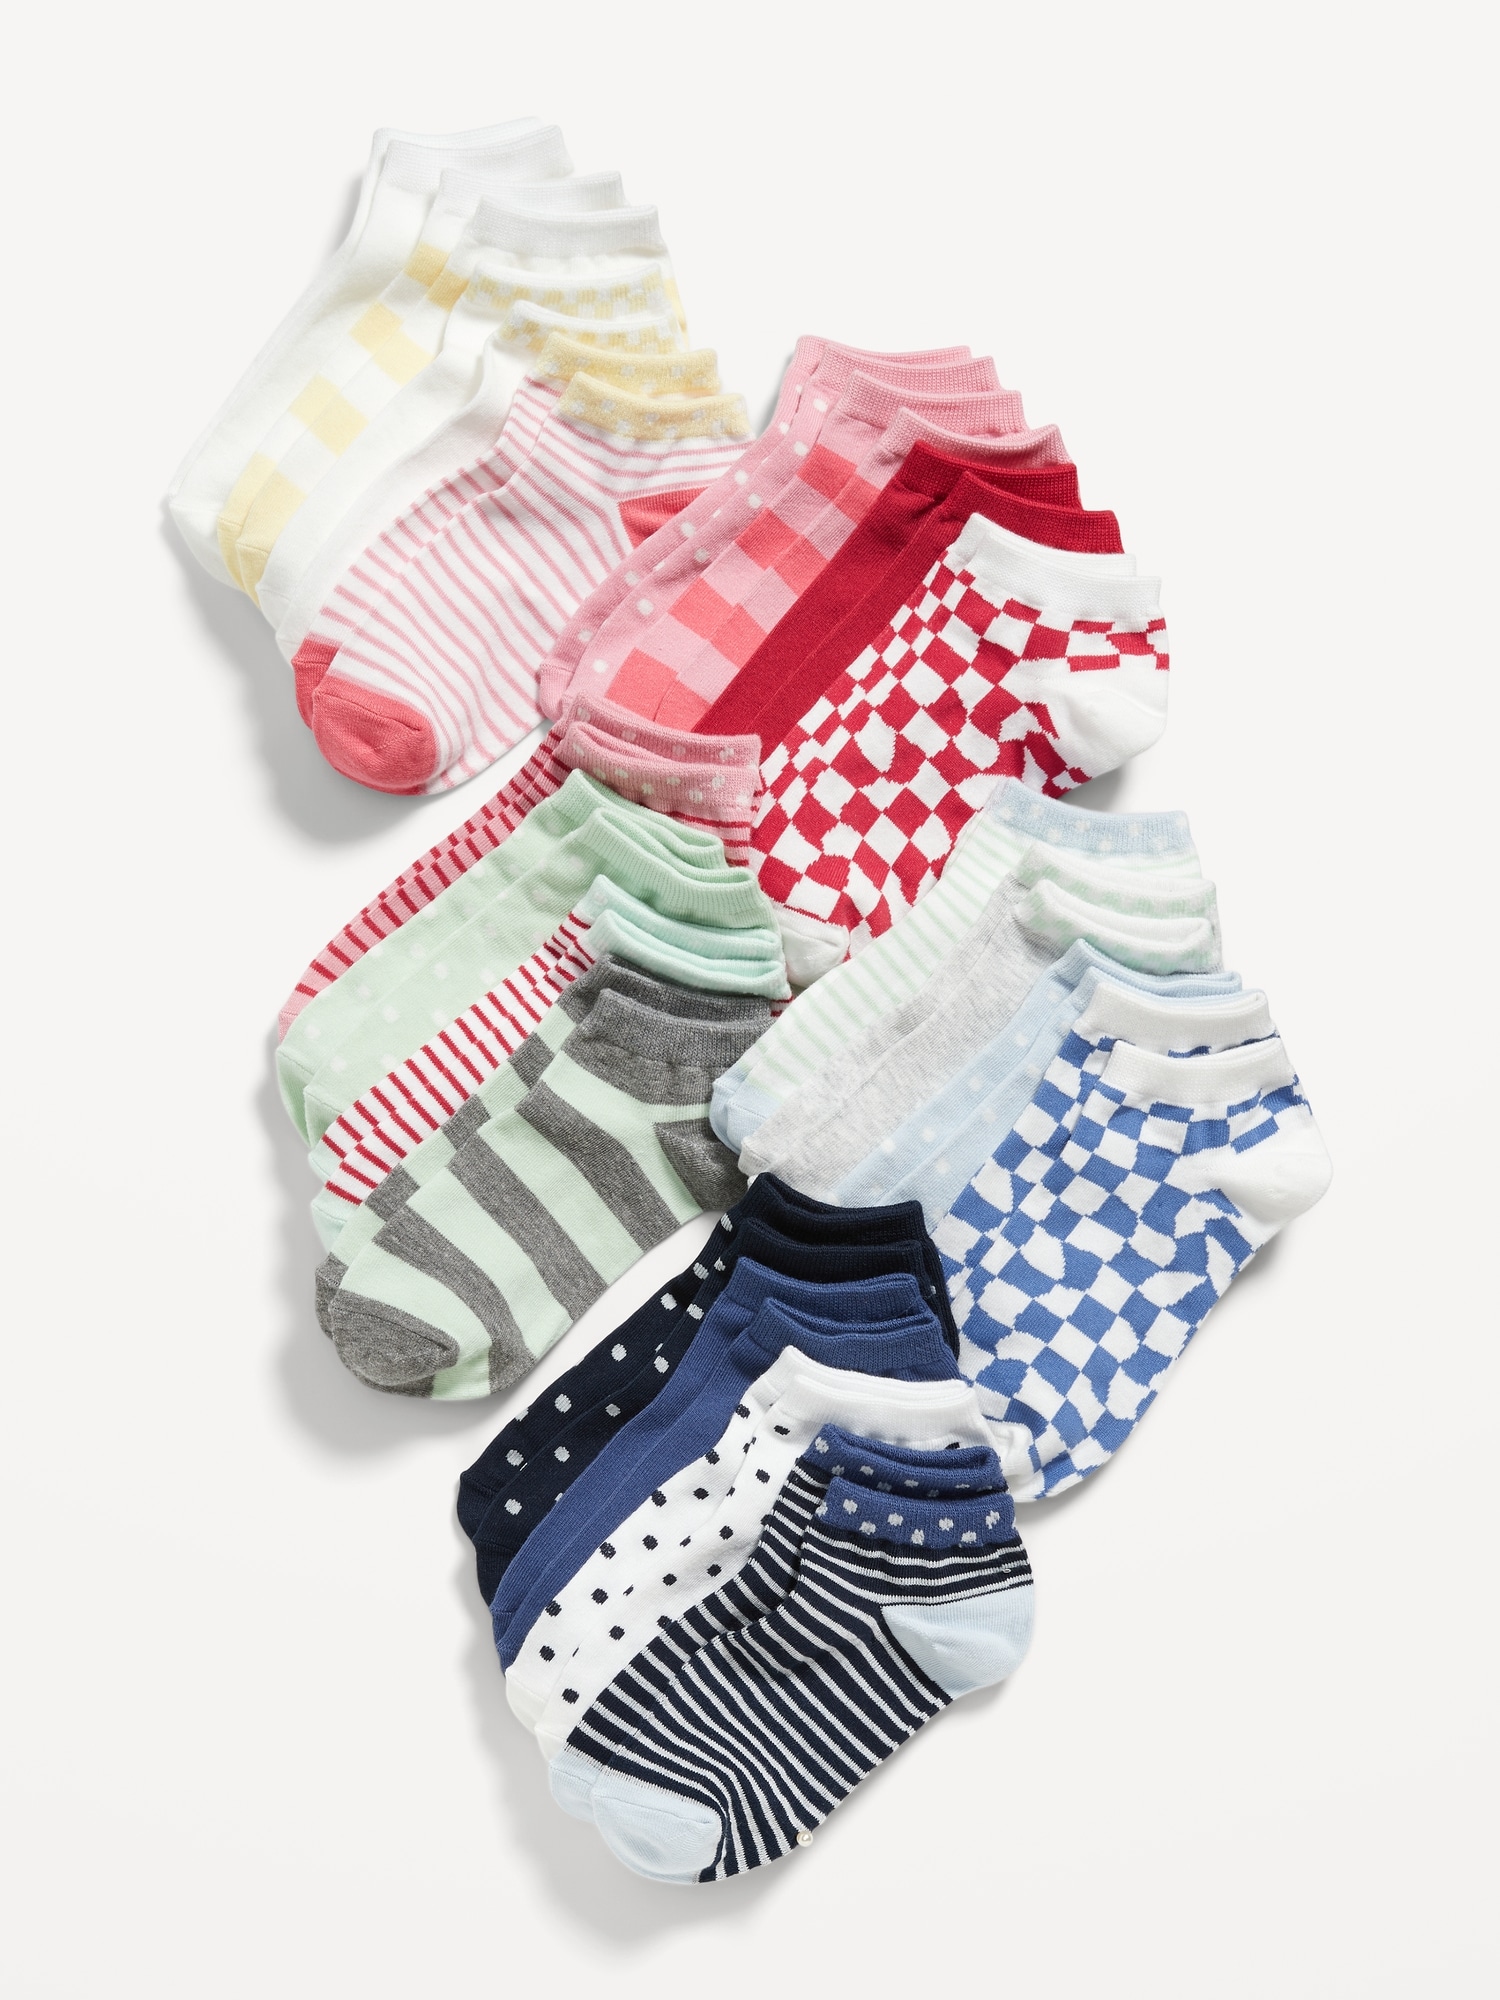 Old Navy Ankle Socks 20-Pack for Girls pink - 553561002